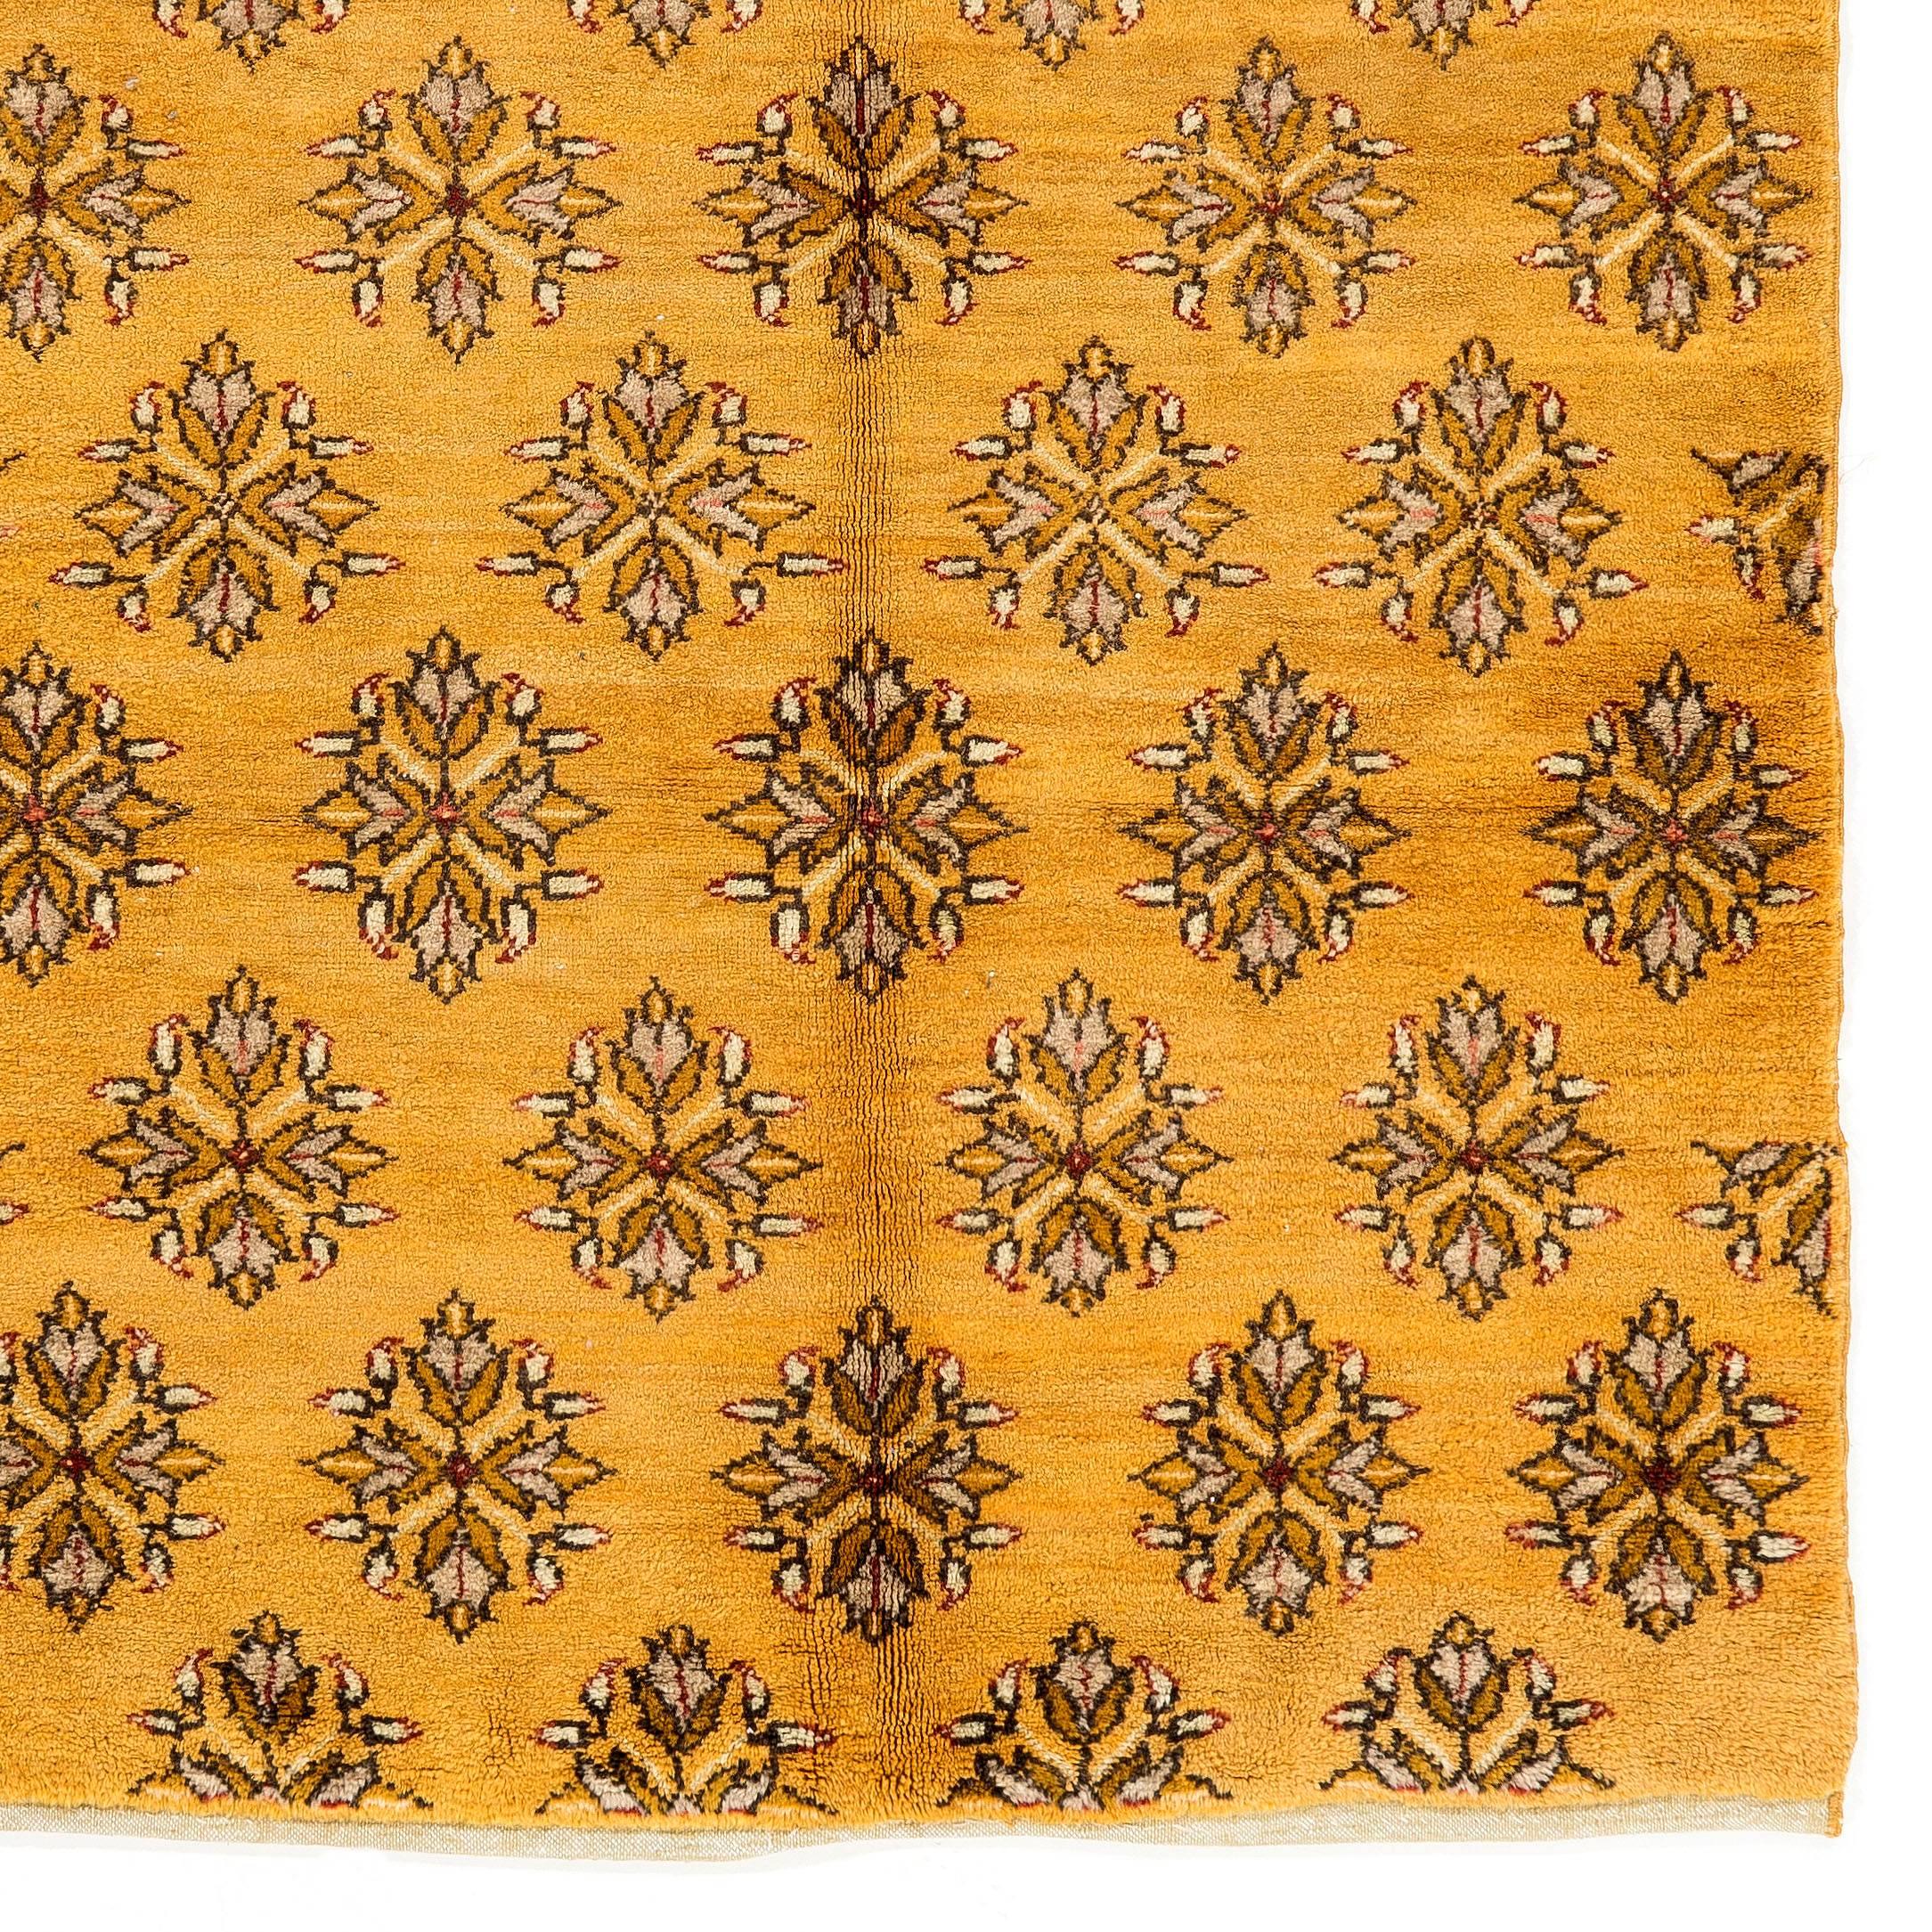 Turkish 5x9.2 Ft Vintage Konya Rug in Orange and Dark Yellow Color, 100% Soft Wool Pile For Sale